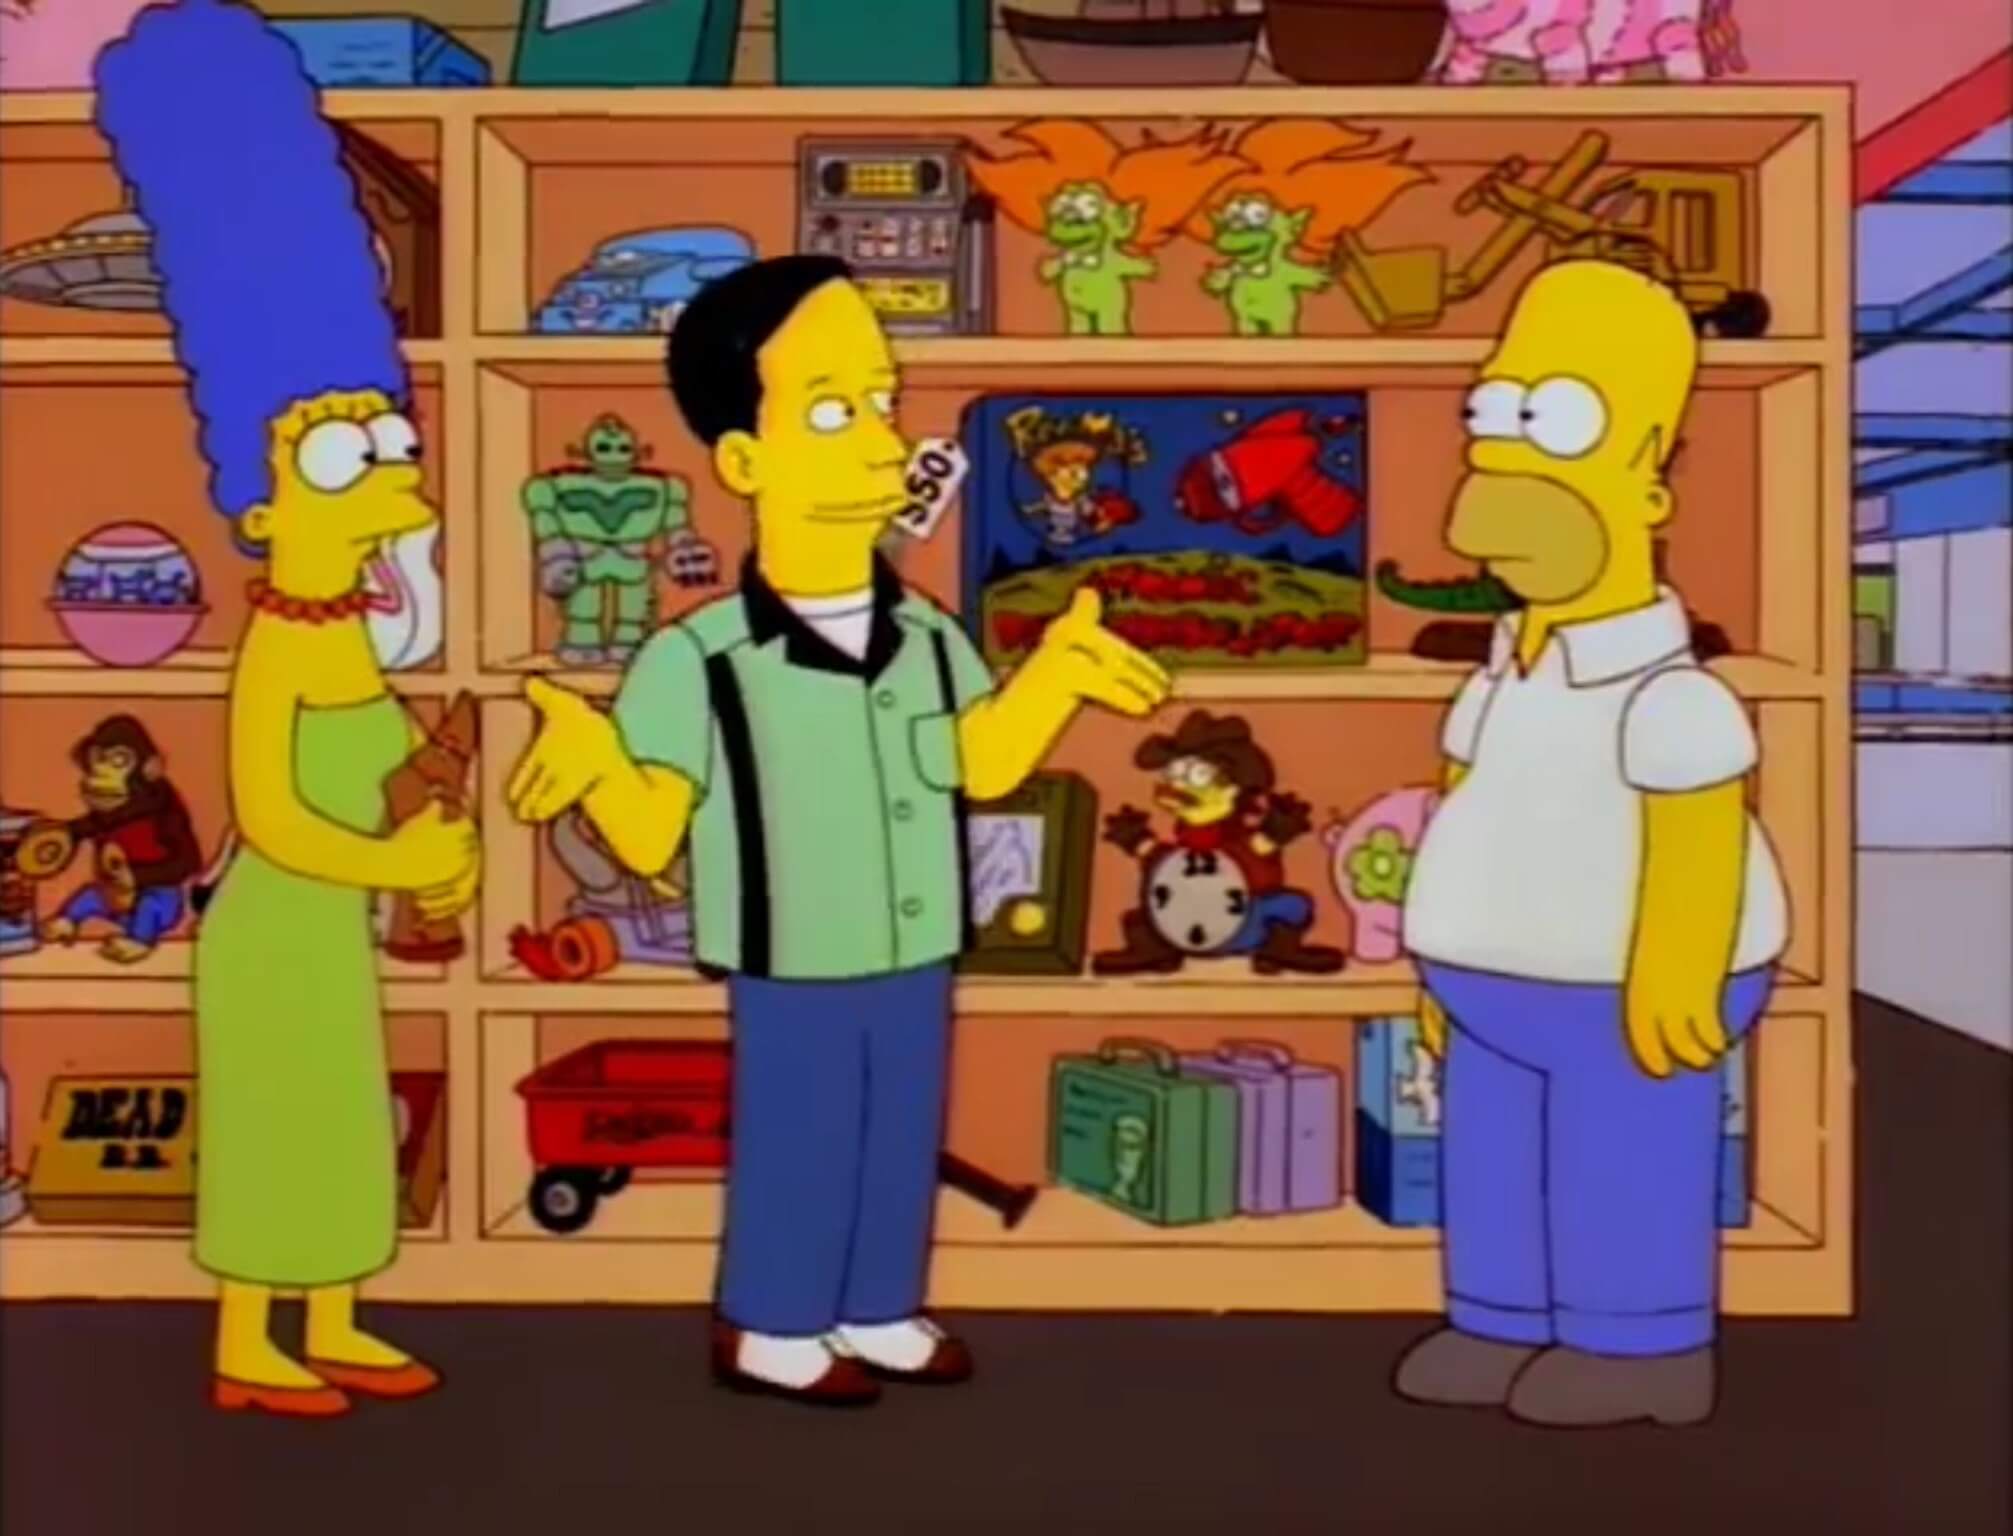 John Waters em episódio de "Os Simpsons"